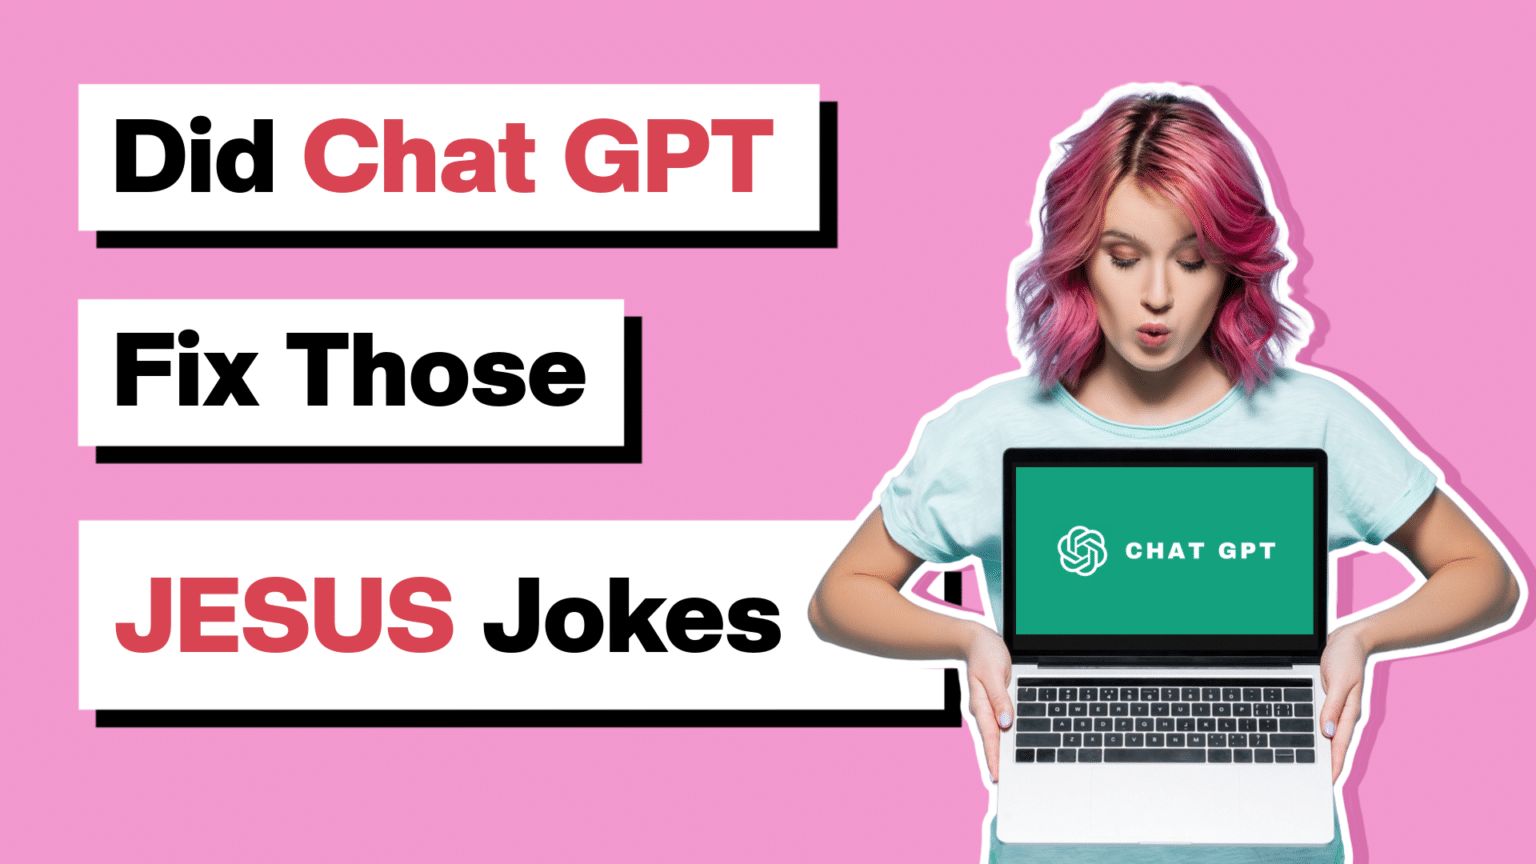 Did Chat GPT Fix Those Jesus Jokes